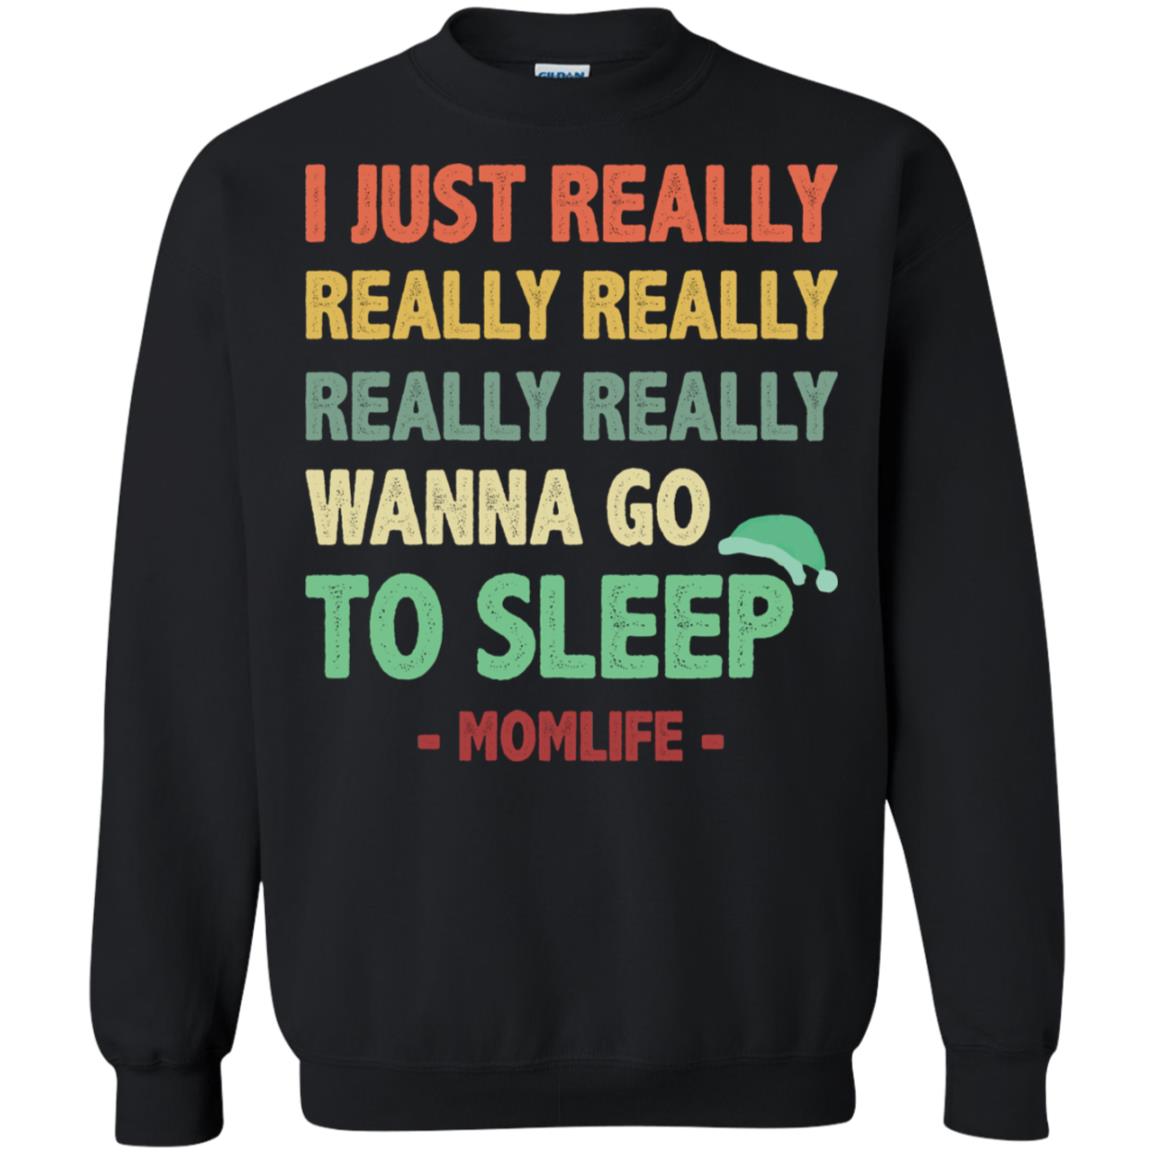 I Just Really Really Really Really Really Wanna Go To Sleep Mom LifeG180 Gildan Crewneck Pullover Sweatshirt 8 oz.